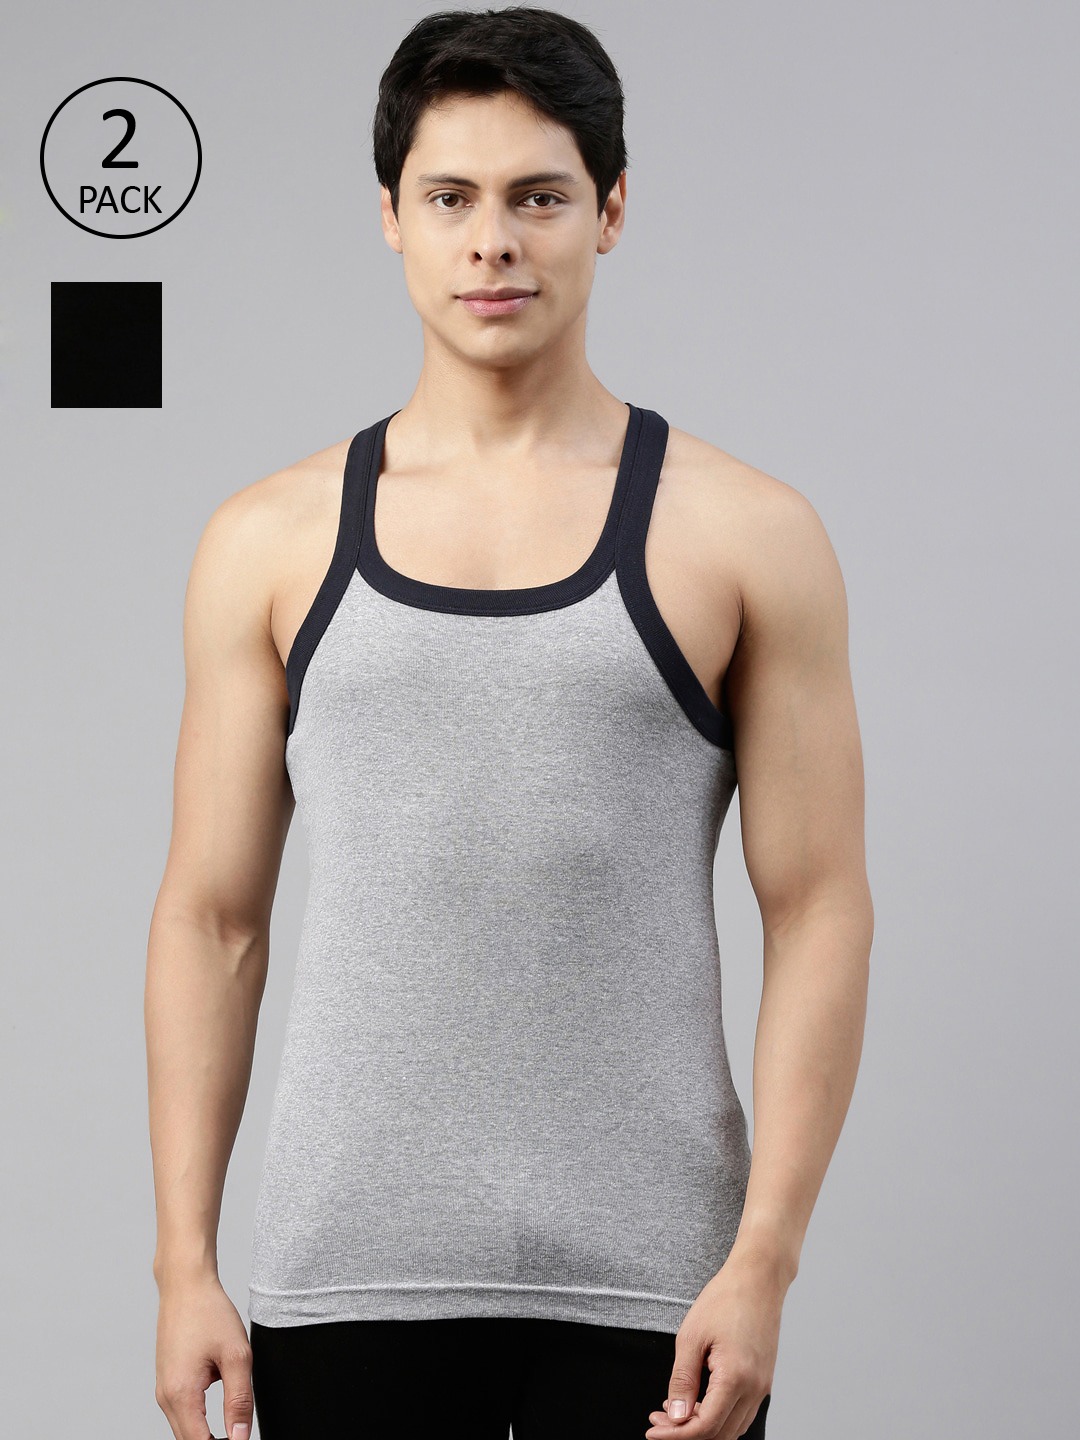 Clothing Innerwear Vests | DIXCY SCOTT Men Pack Of 2 Cotton Gym Vests - HF66300